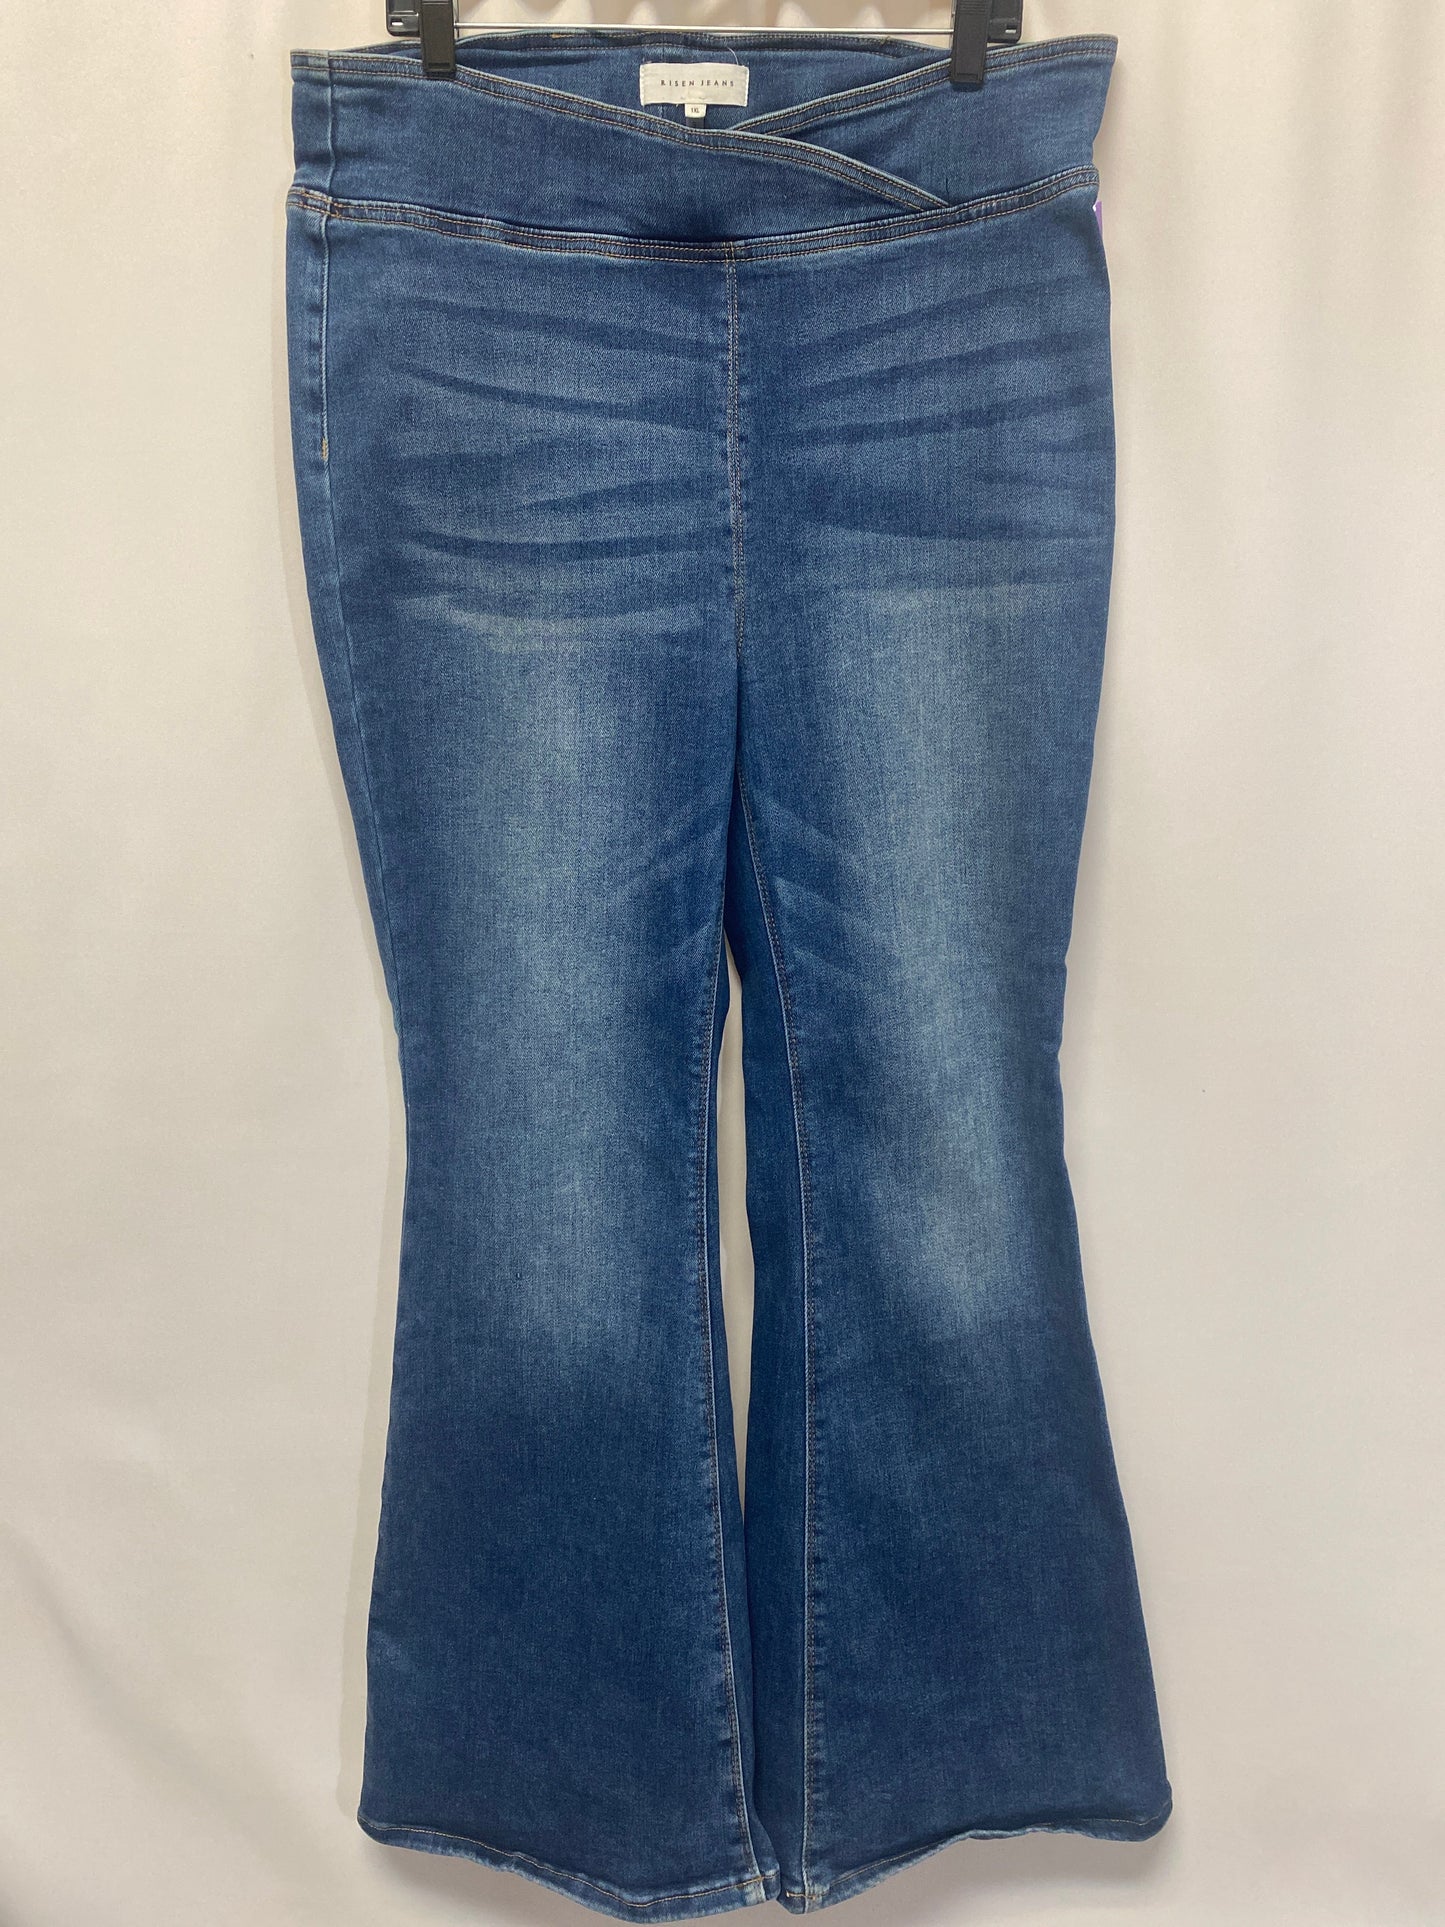 Blue Denim Jeans Boot Cut Risen, Size 1x